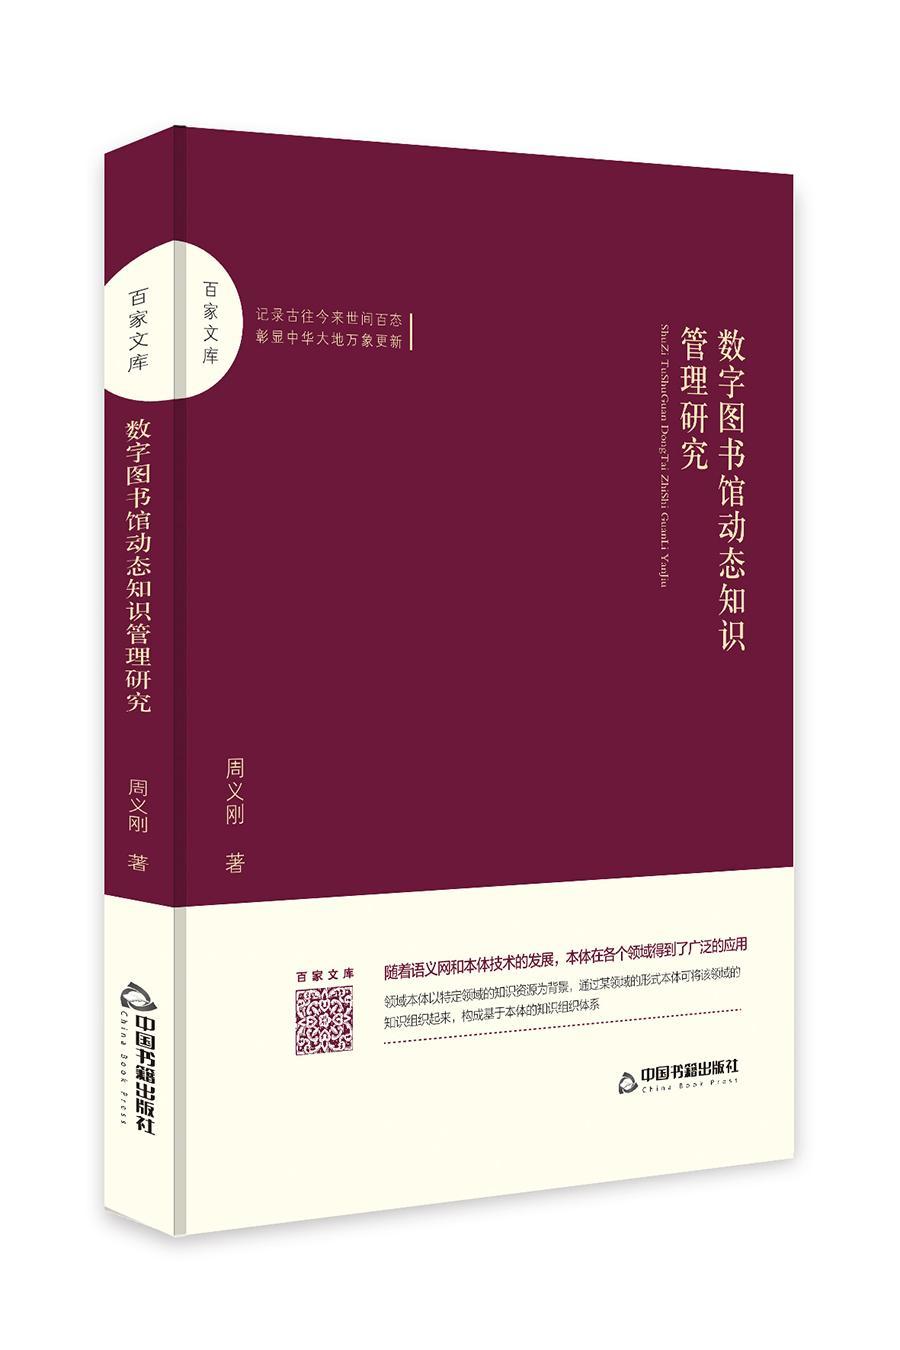 [rt] 数字图书馆动态知识管理研究  周义刚  中国书籍出版社  社会科学  数字图书馆知识管理研究